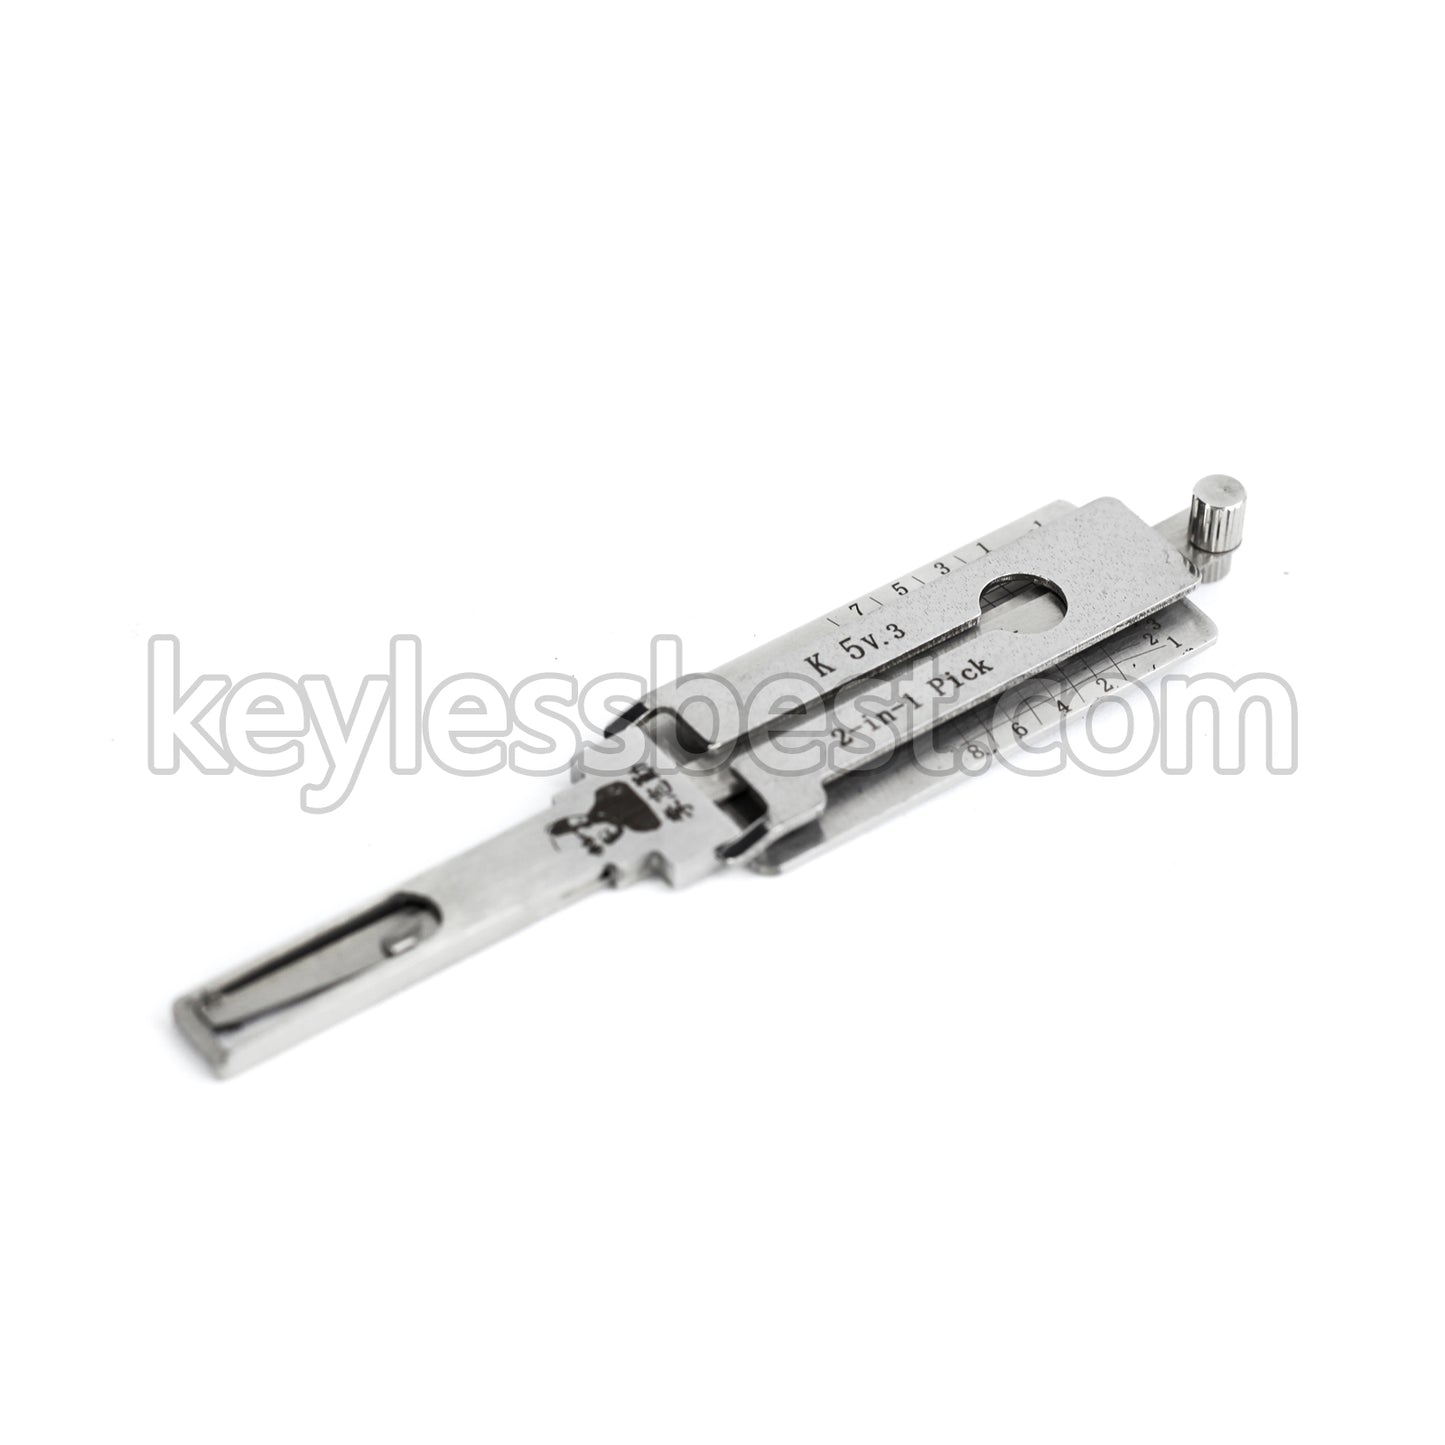 Original Lishi Tools K5 2 in 1 locksmith tools lock pick For Door Lock Opener Professional Hand Tools